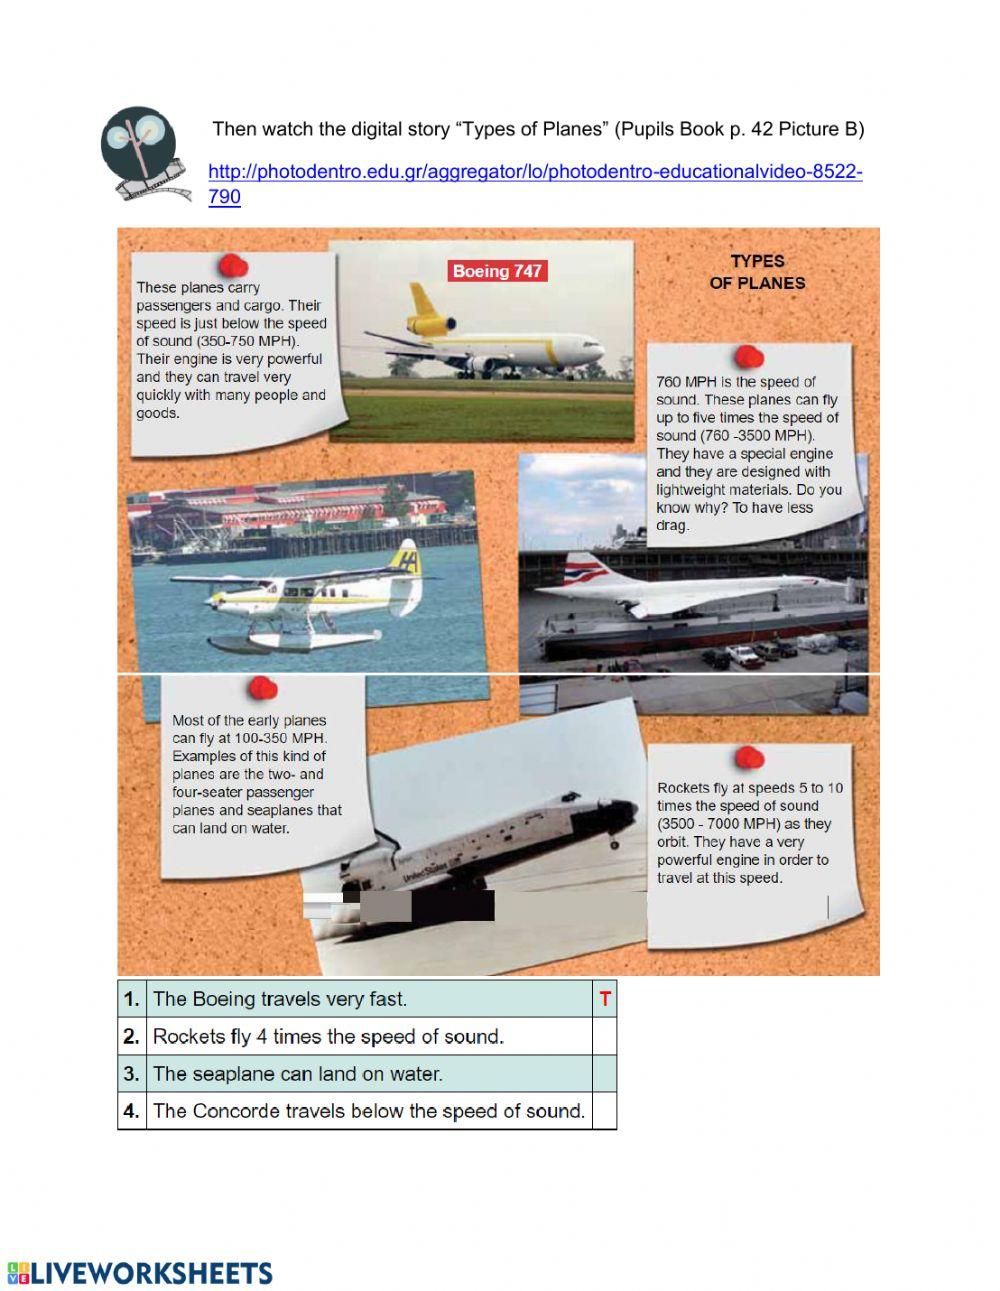 Unit 4 Lesson 2 A flight incident - Types of planes